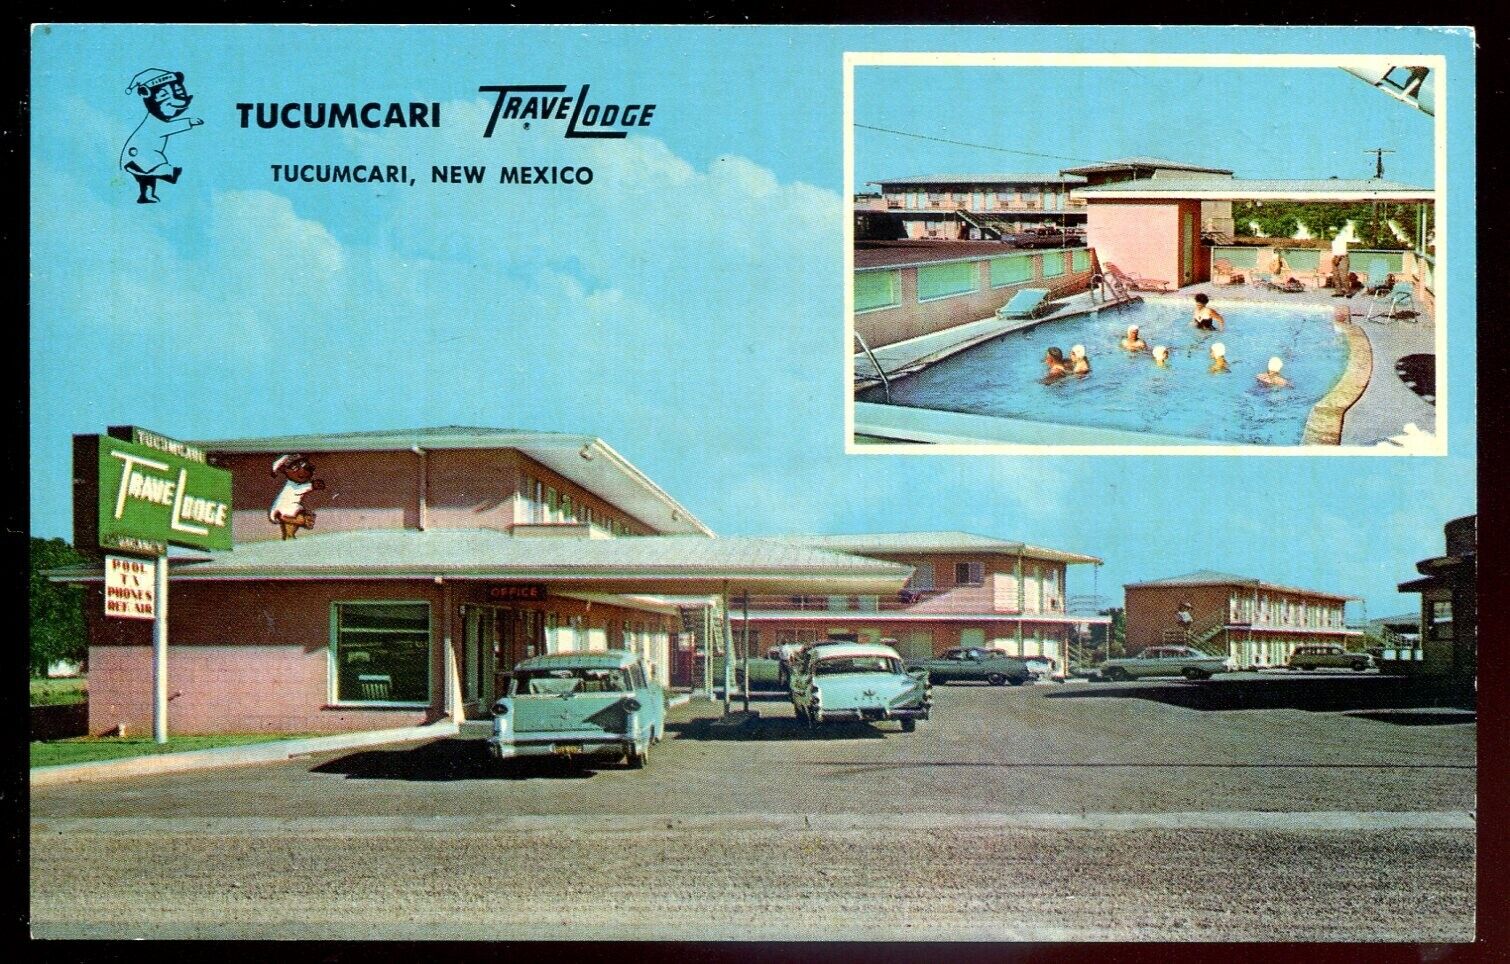 TUCUMCARI New Mexico Postcard 1960s Travel Lodge Old Cars